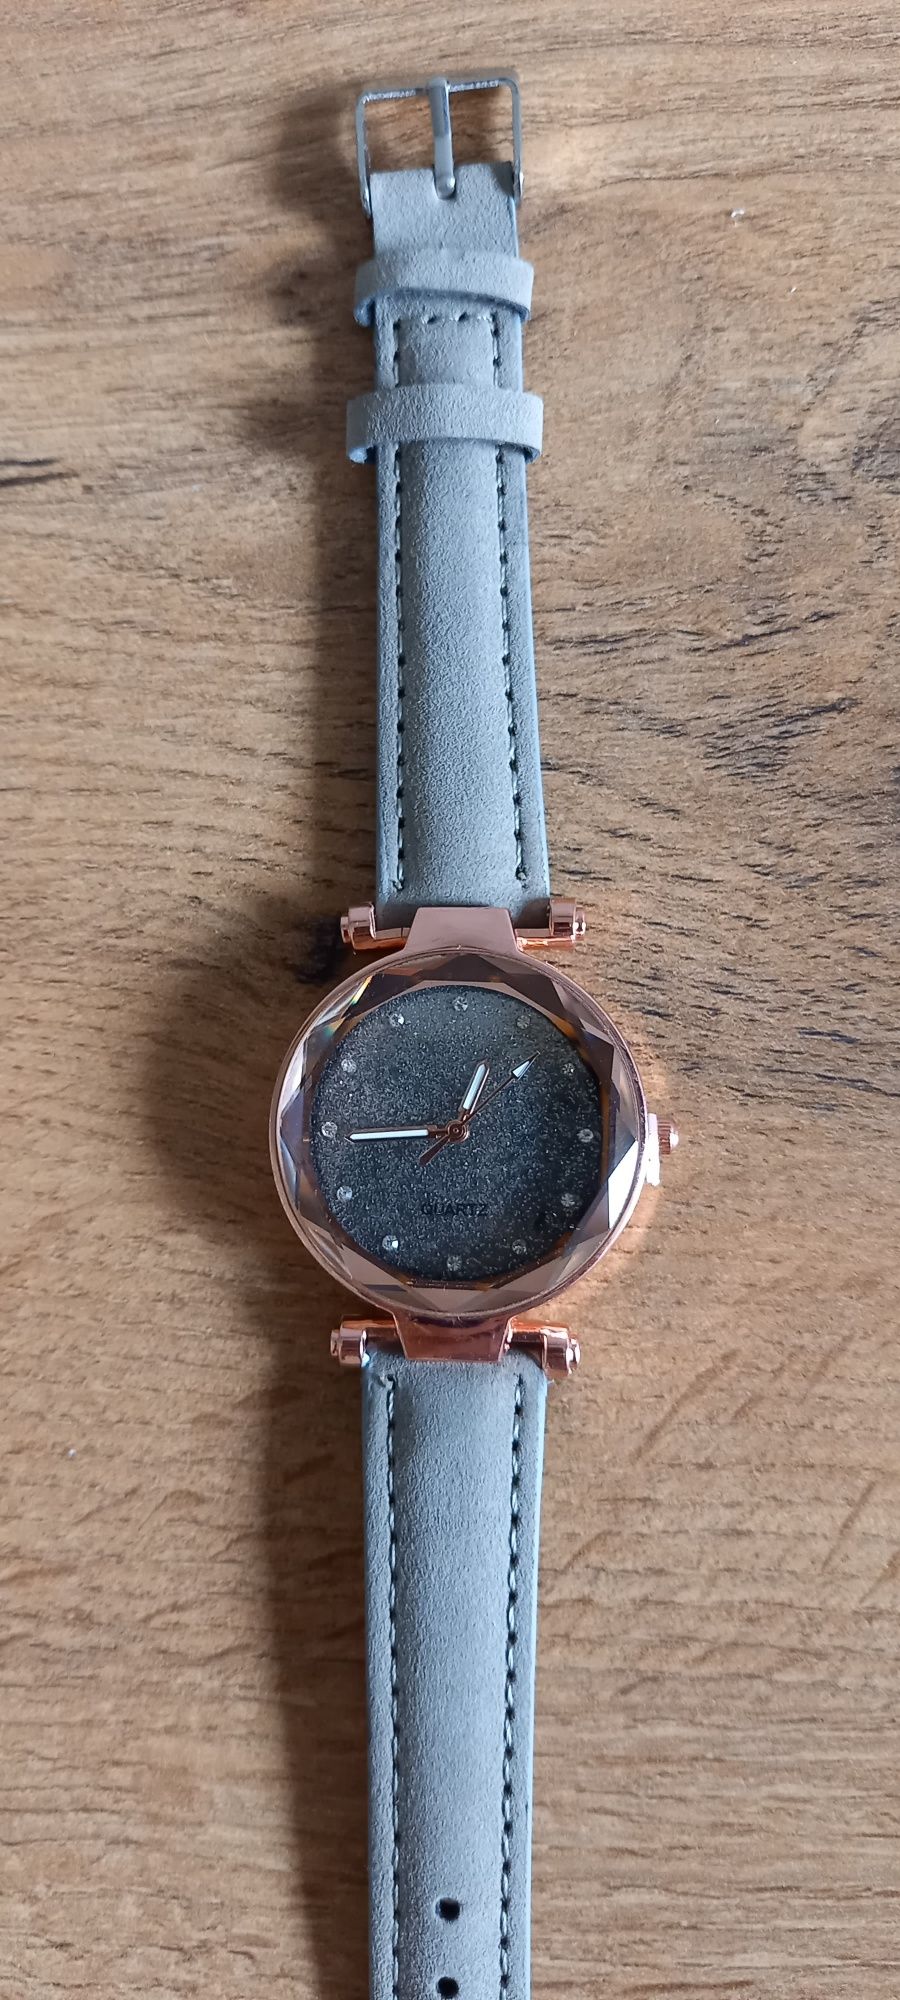 Nowy zegarek quartz szary brokat zamsz